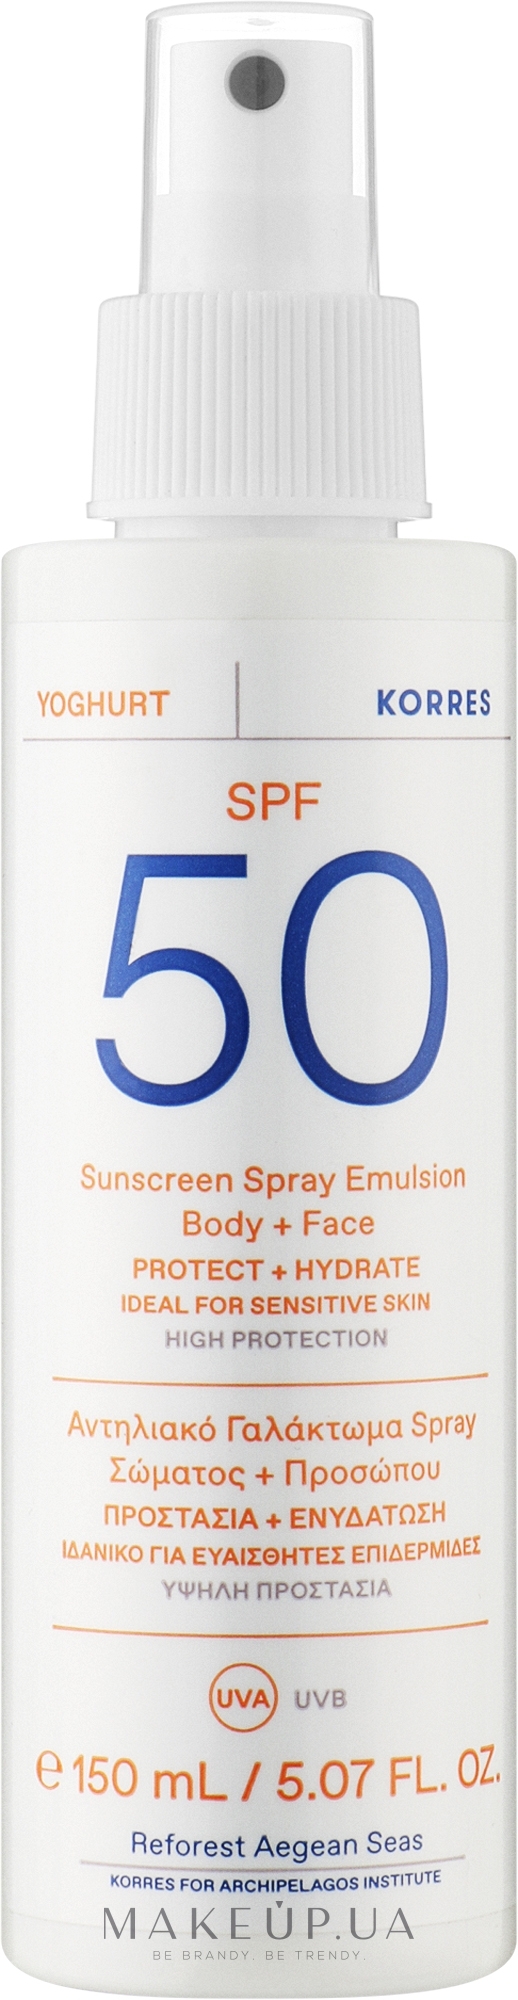 Сонцезахисна емульсія-спрей для обличчя й тіла - Korres Yoghurt Sunscreen Spray Emulsion Face & Body SPF50 — фото 150ml